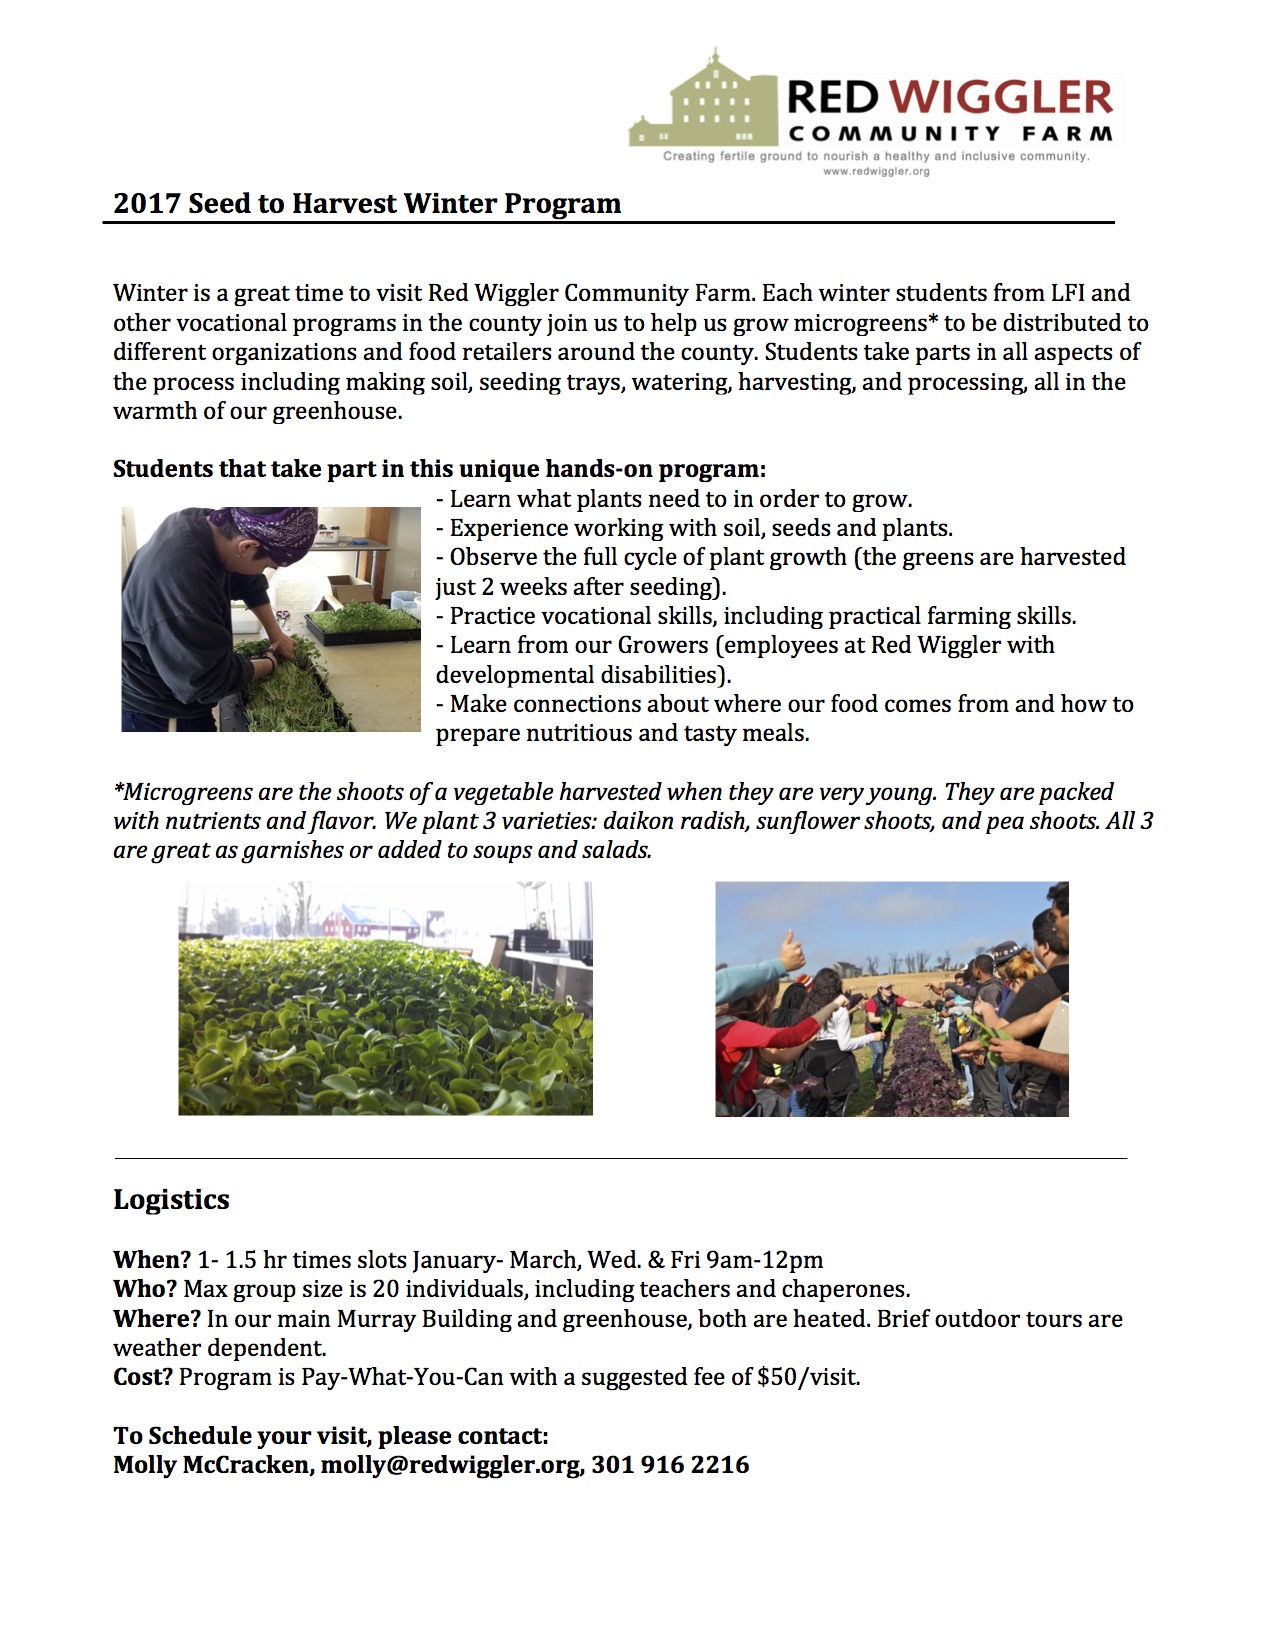 2017-seed-to-harvest-winter-program